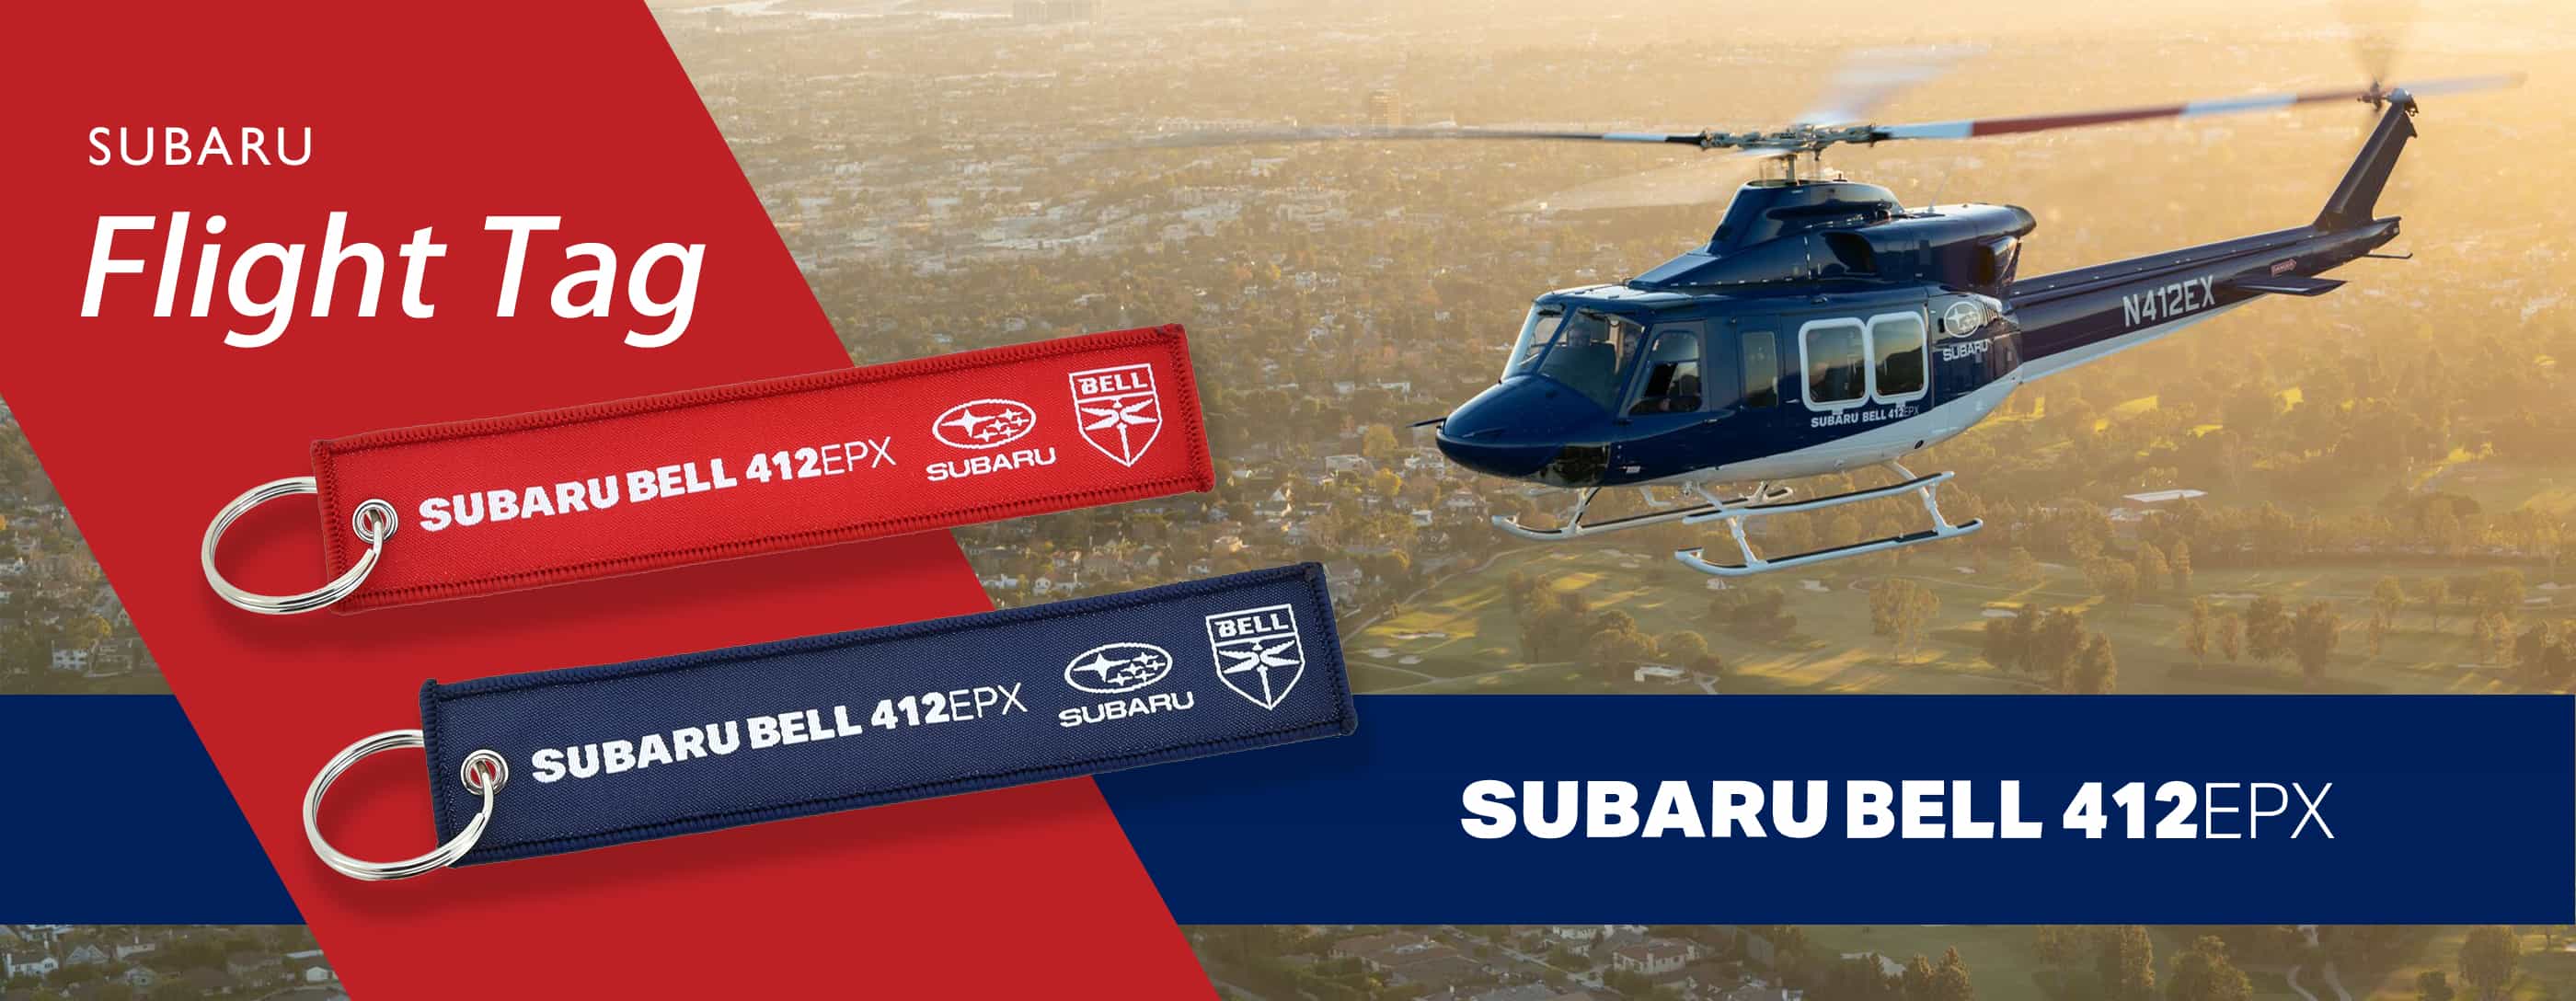 SUBARUが作ったヘリ「SUBARU BELL 412EPX」のフライトタグが新登場！